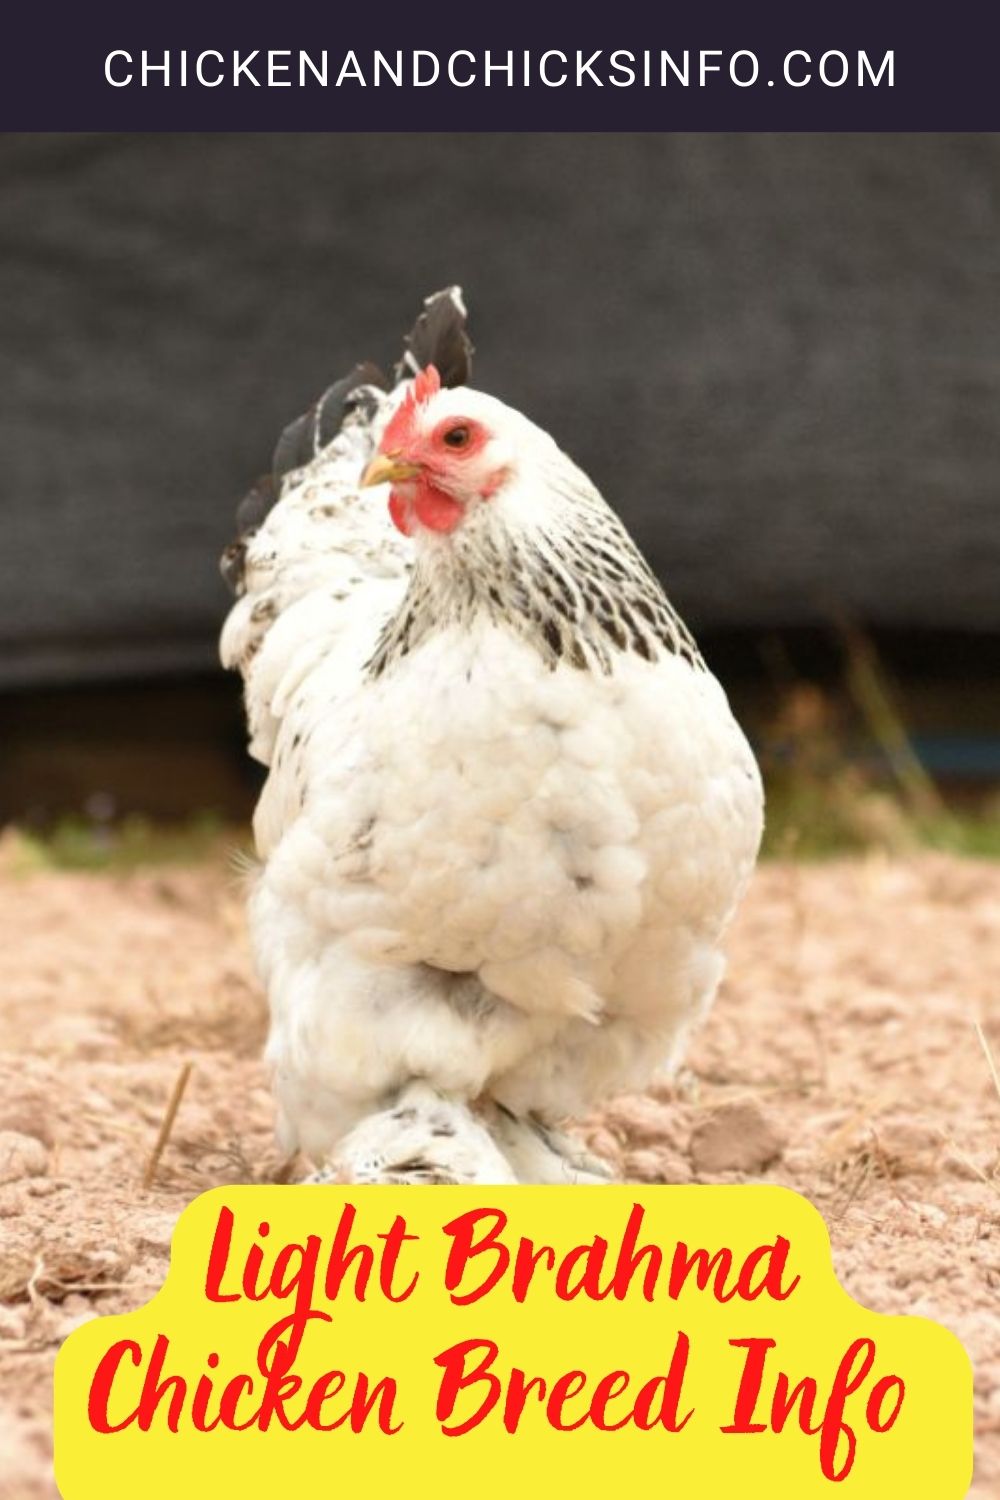 Light Brahma Chicken Breed Info + Where to Buy pinterest image.